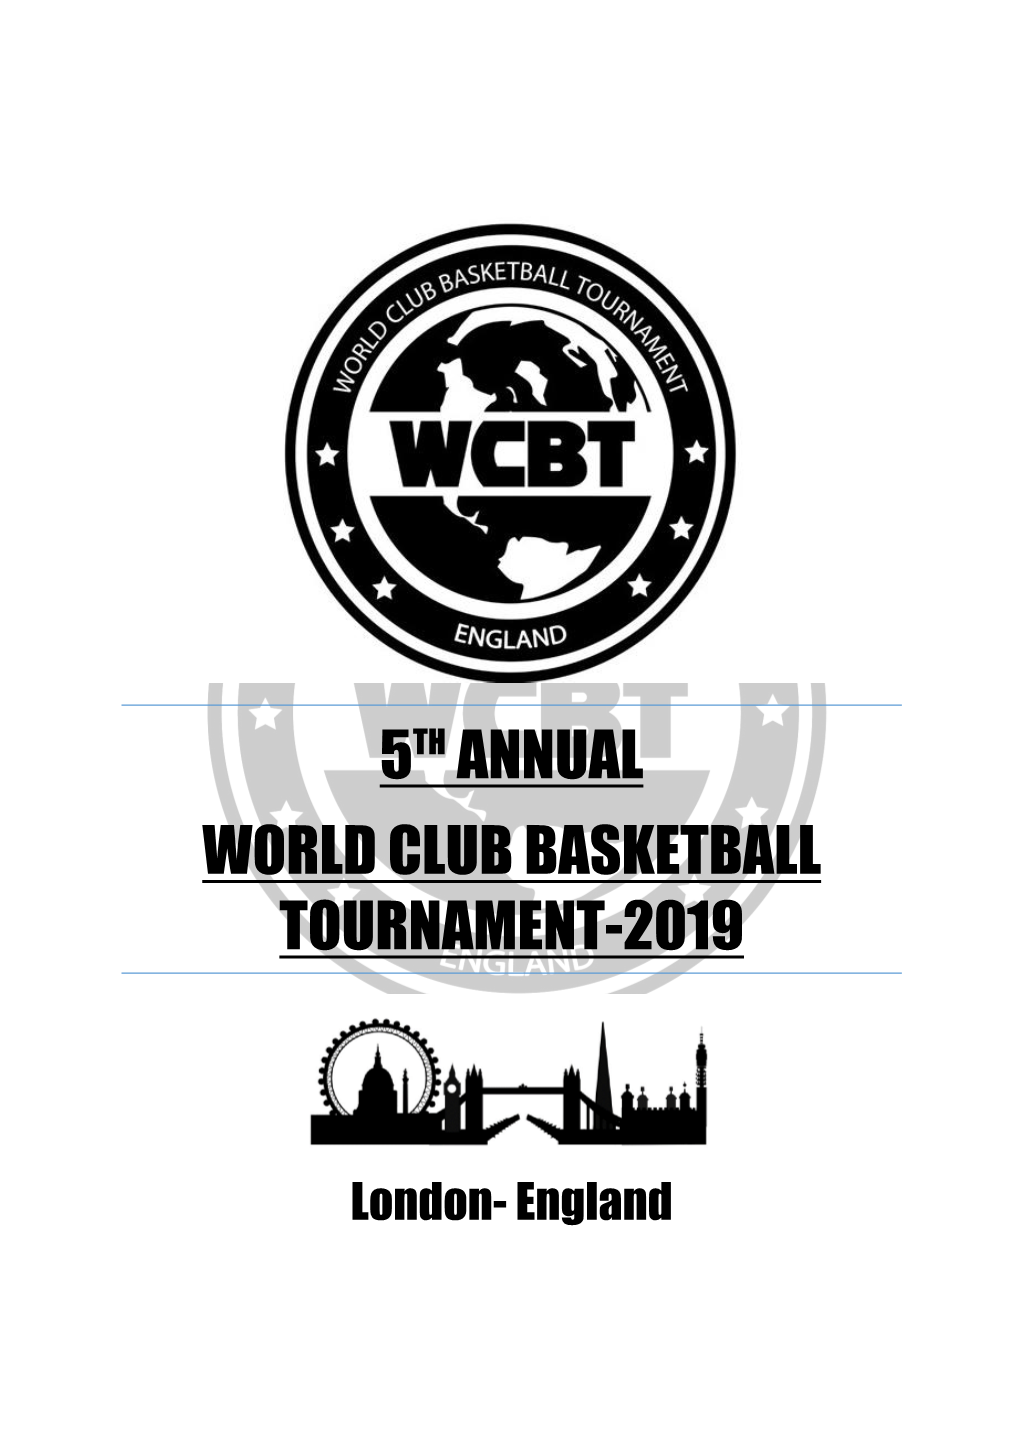 WORLD CLUB BASKETBALL TOURNAMENT 2015 Registration Form